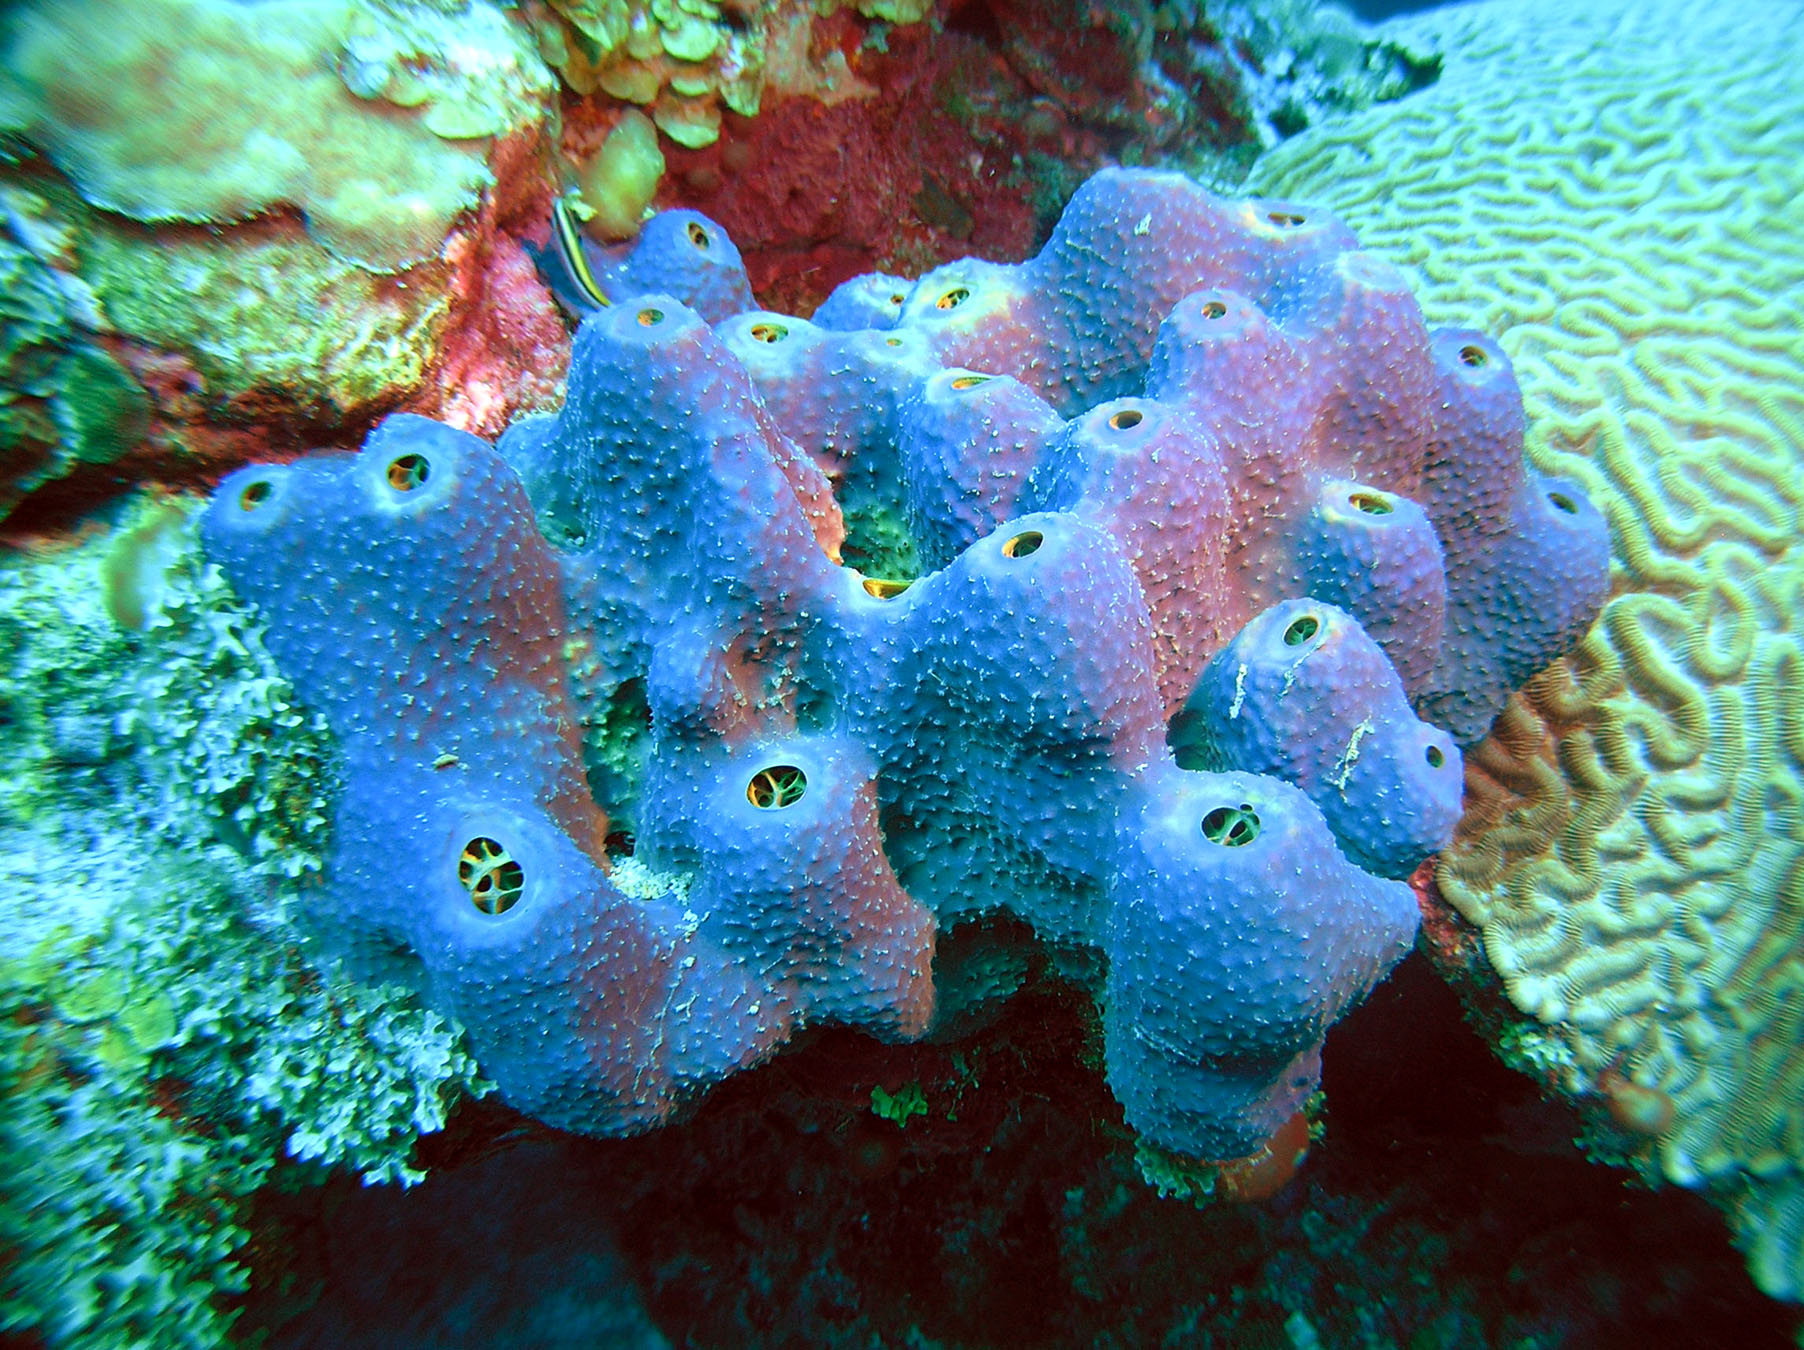 Are new sponges toxic?